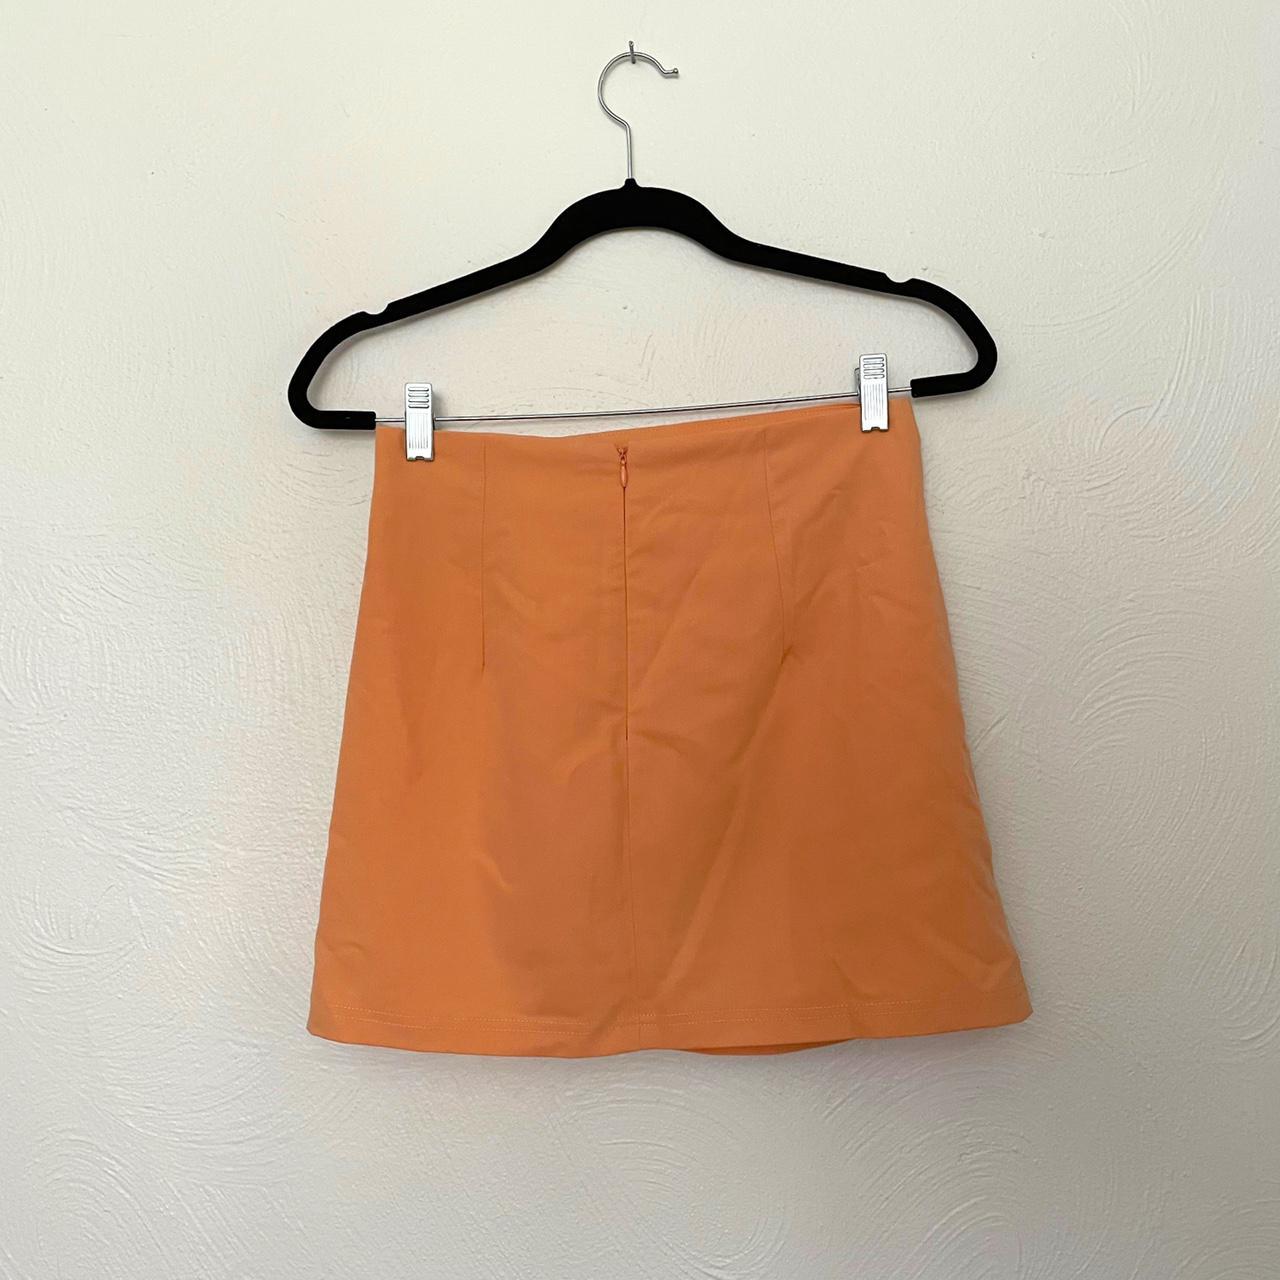 Product Image 3 - Orange mini skirt!

originally purchased from